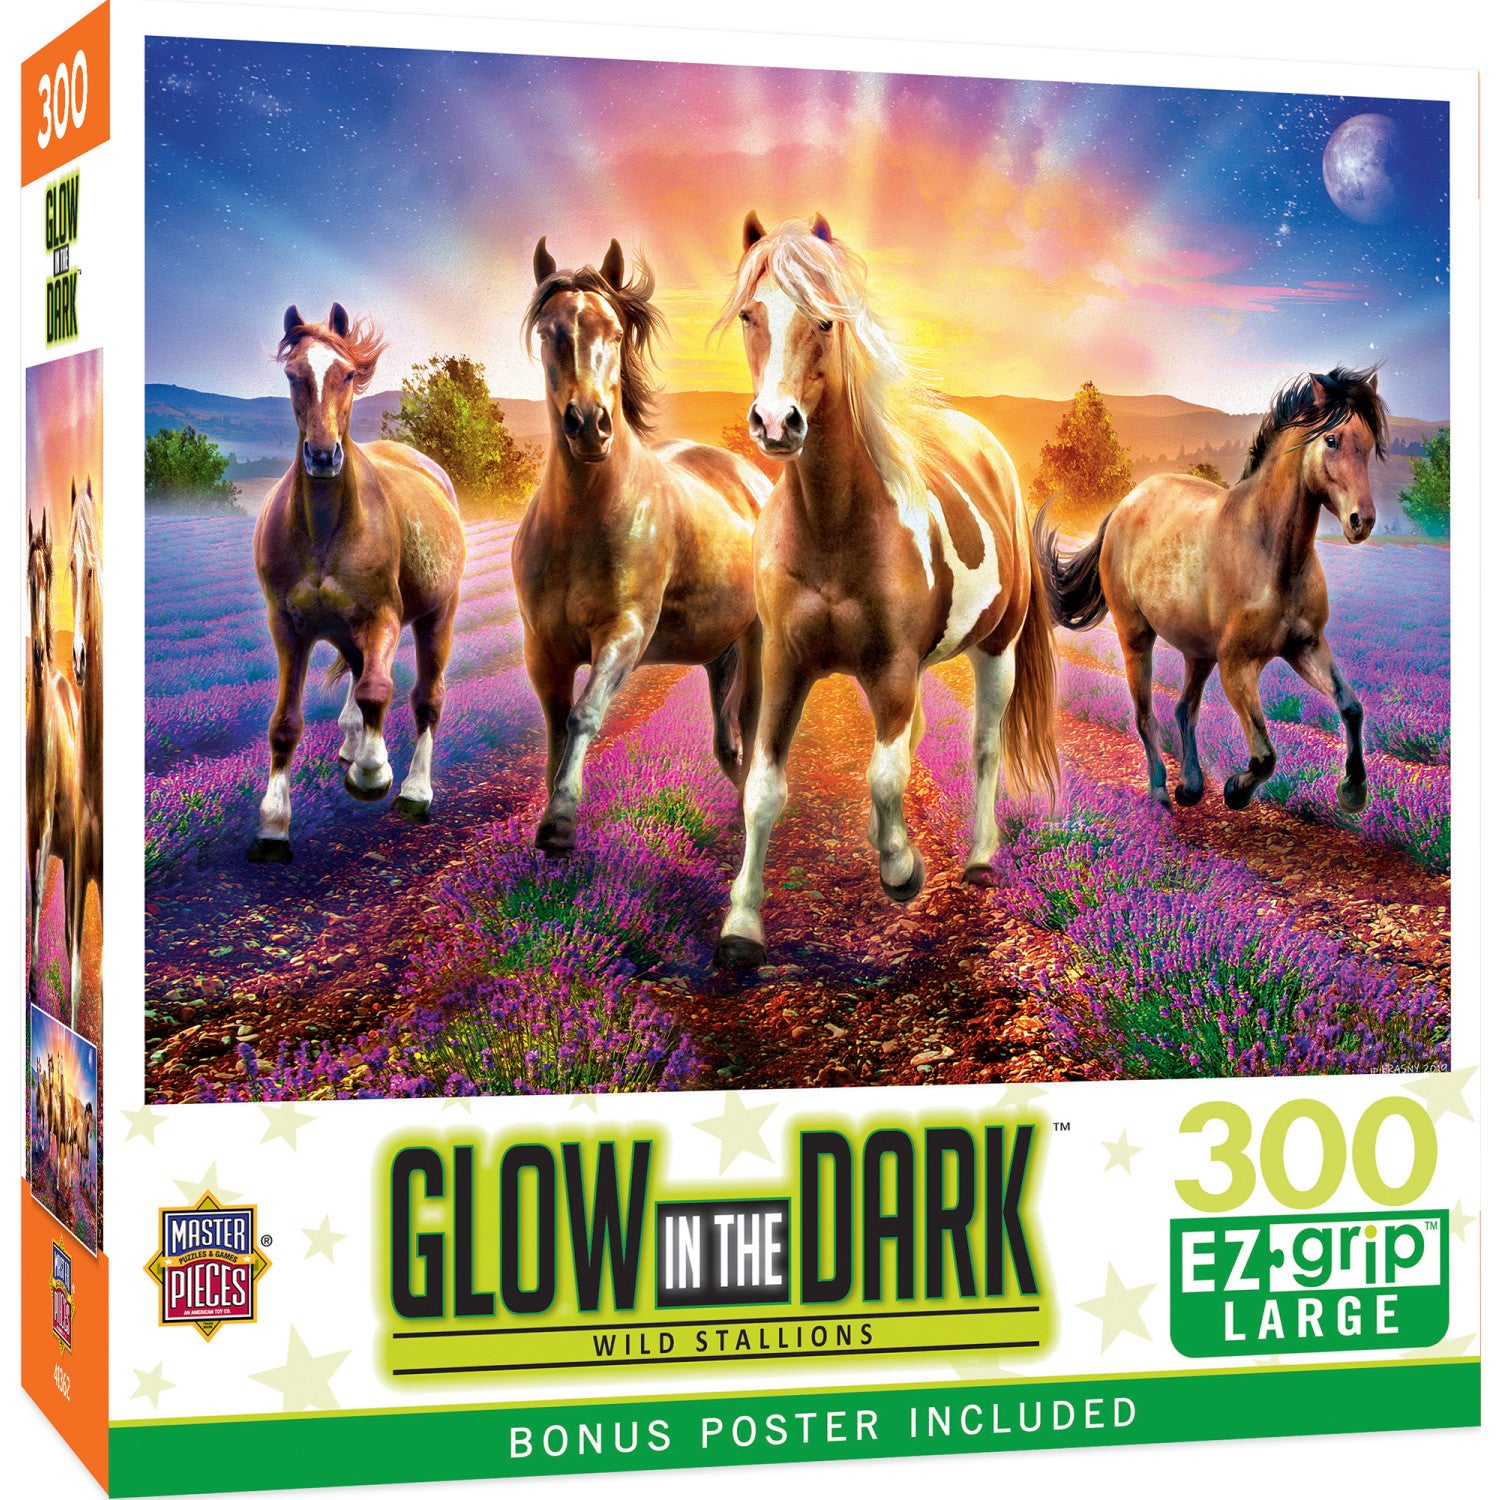 Glow in the Dark - Wild Stallions 300 Piece EZ Grip Jigsaw Puzzle